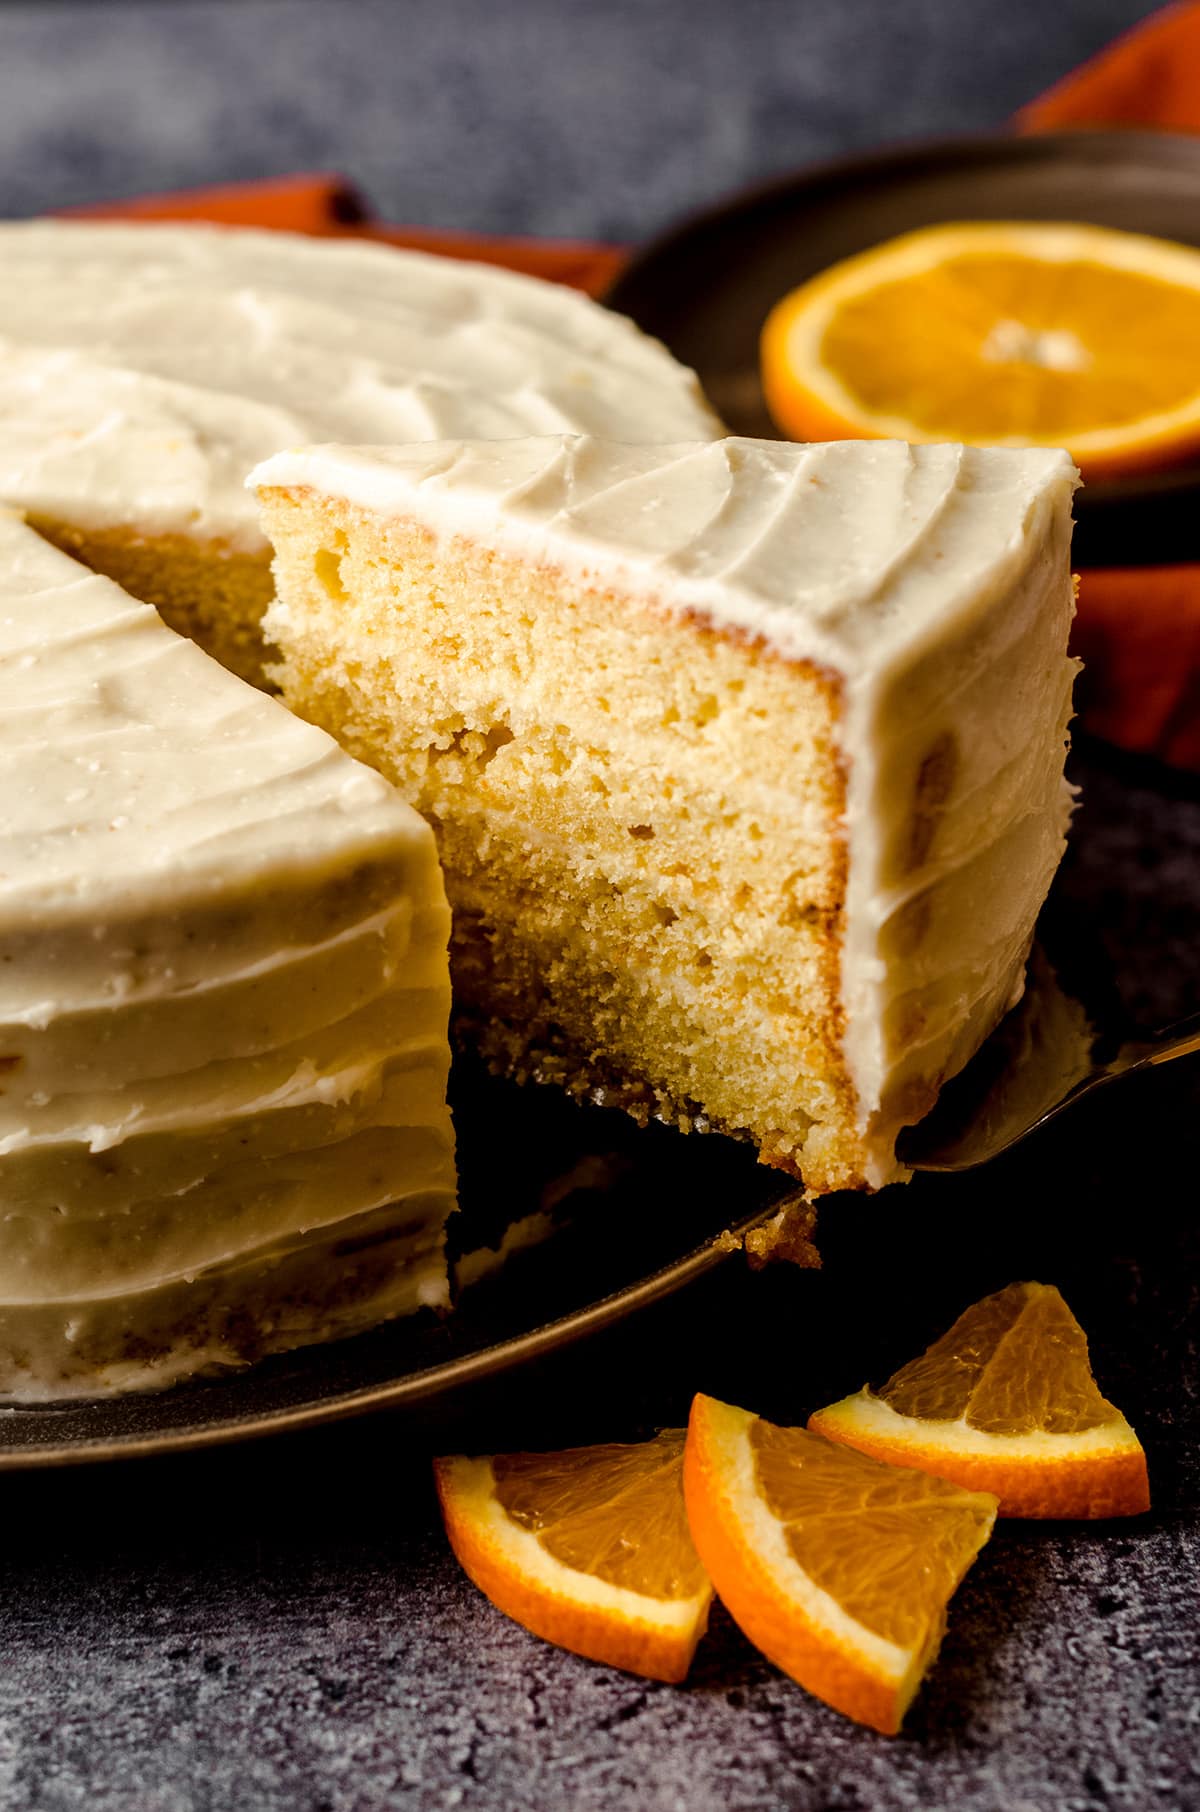 Orange Creamsicle Cake Recipe